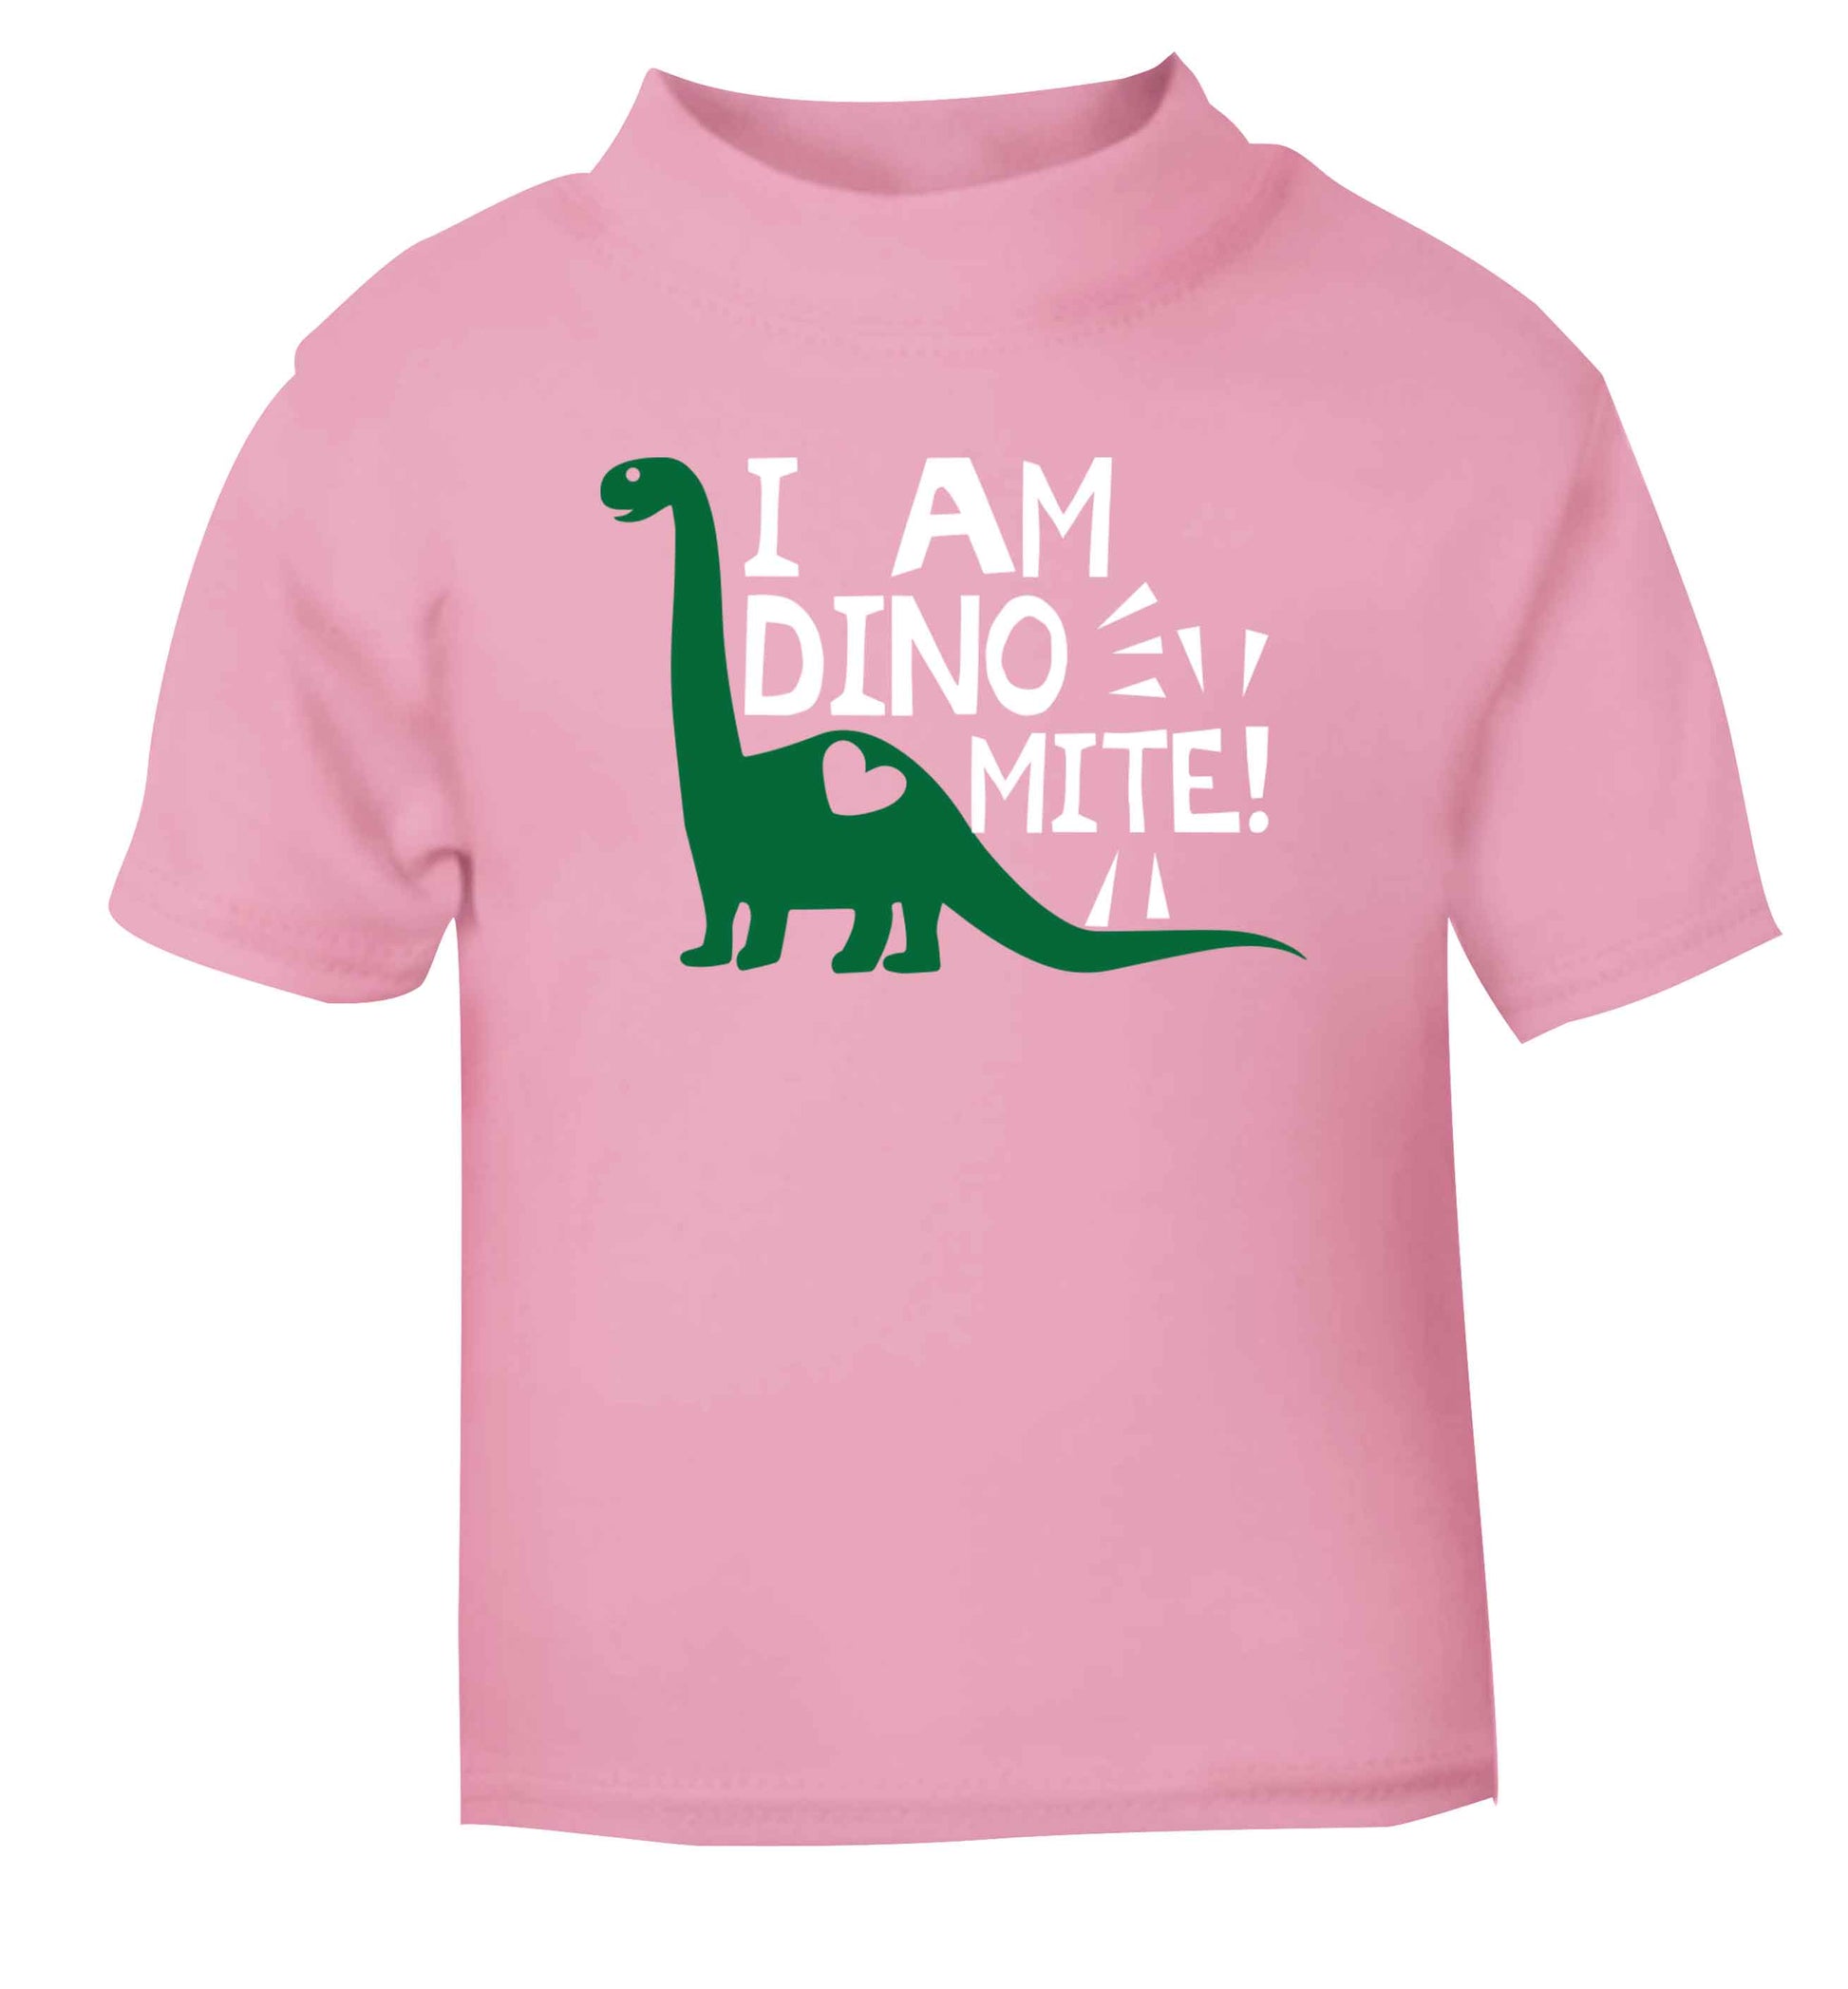 I am dinomite! light pink Baby Toddler Tshirt 2 Years